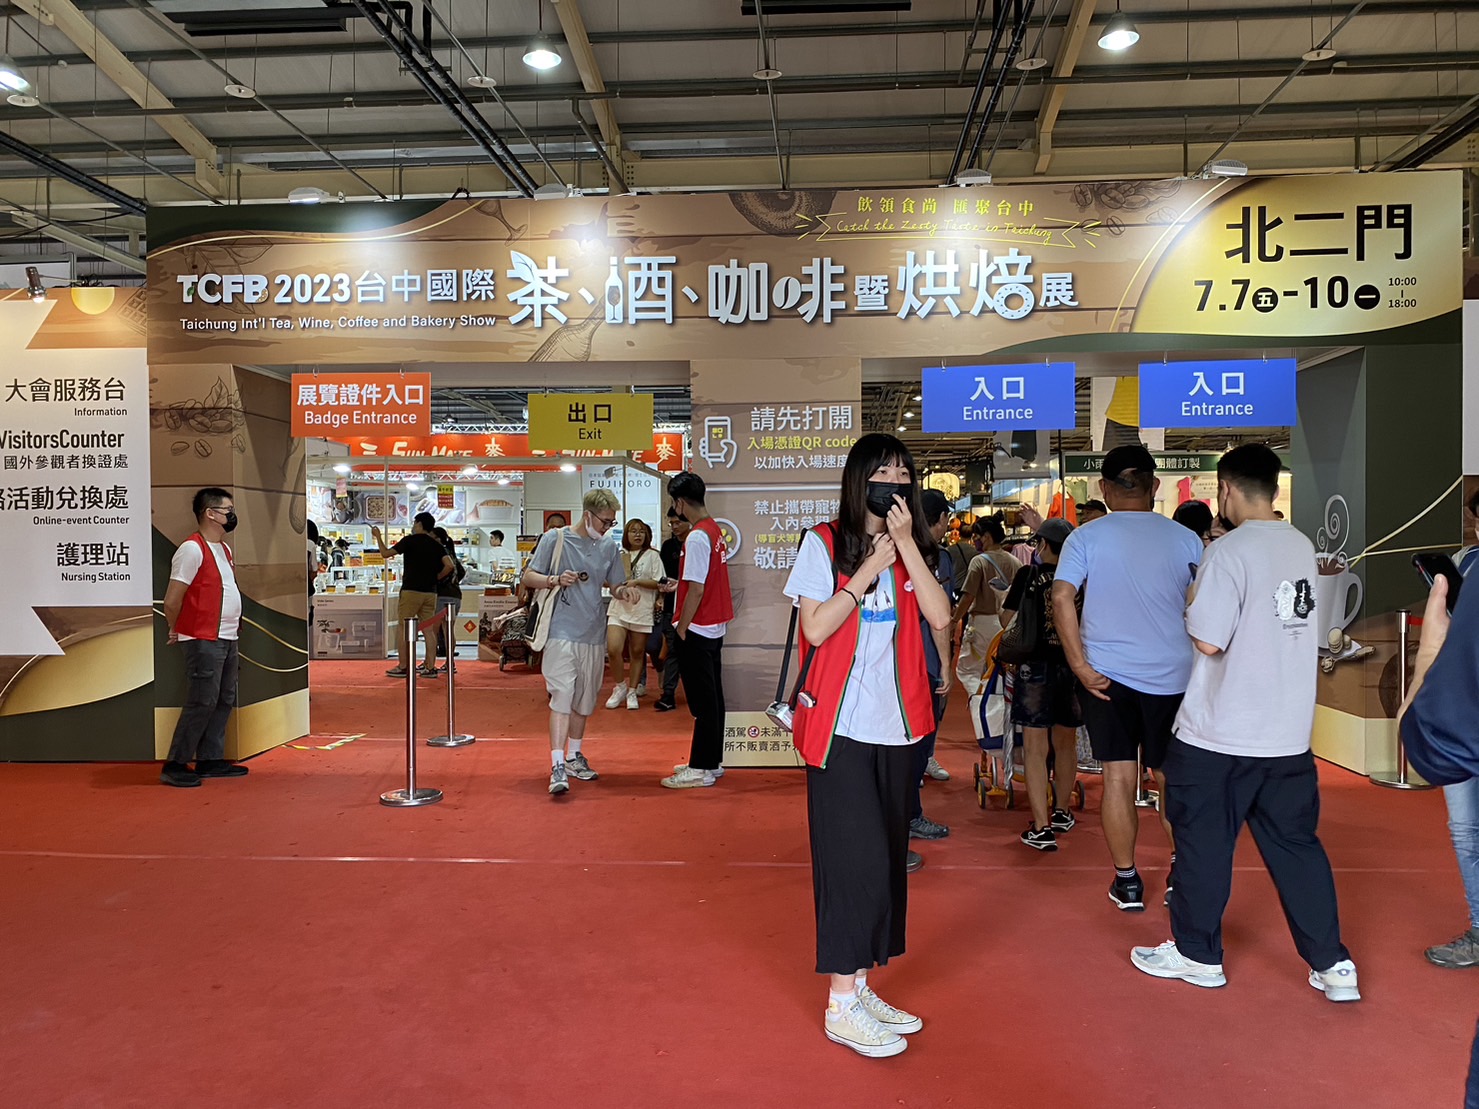 TCFB 2023年台中國際 茶 酒 咖啡 烘焙展 咖啡豆 歐客佬 TCFB 2023 Taichung International Tea Wine Coffee Bakery Exhibition Coffee Beans Ouklo